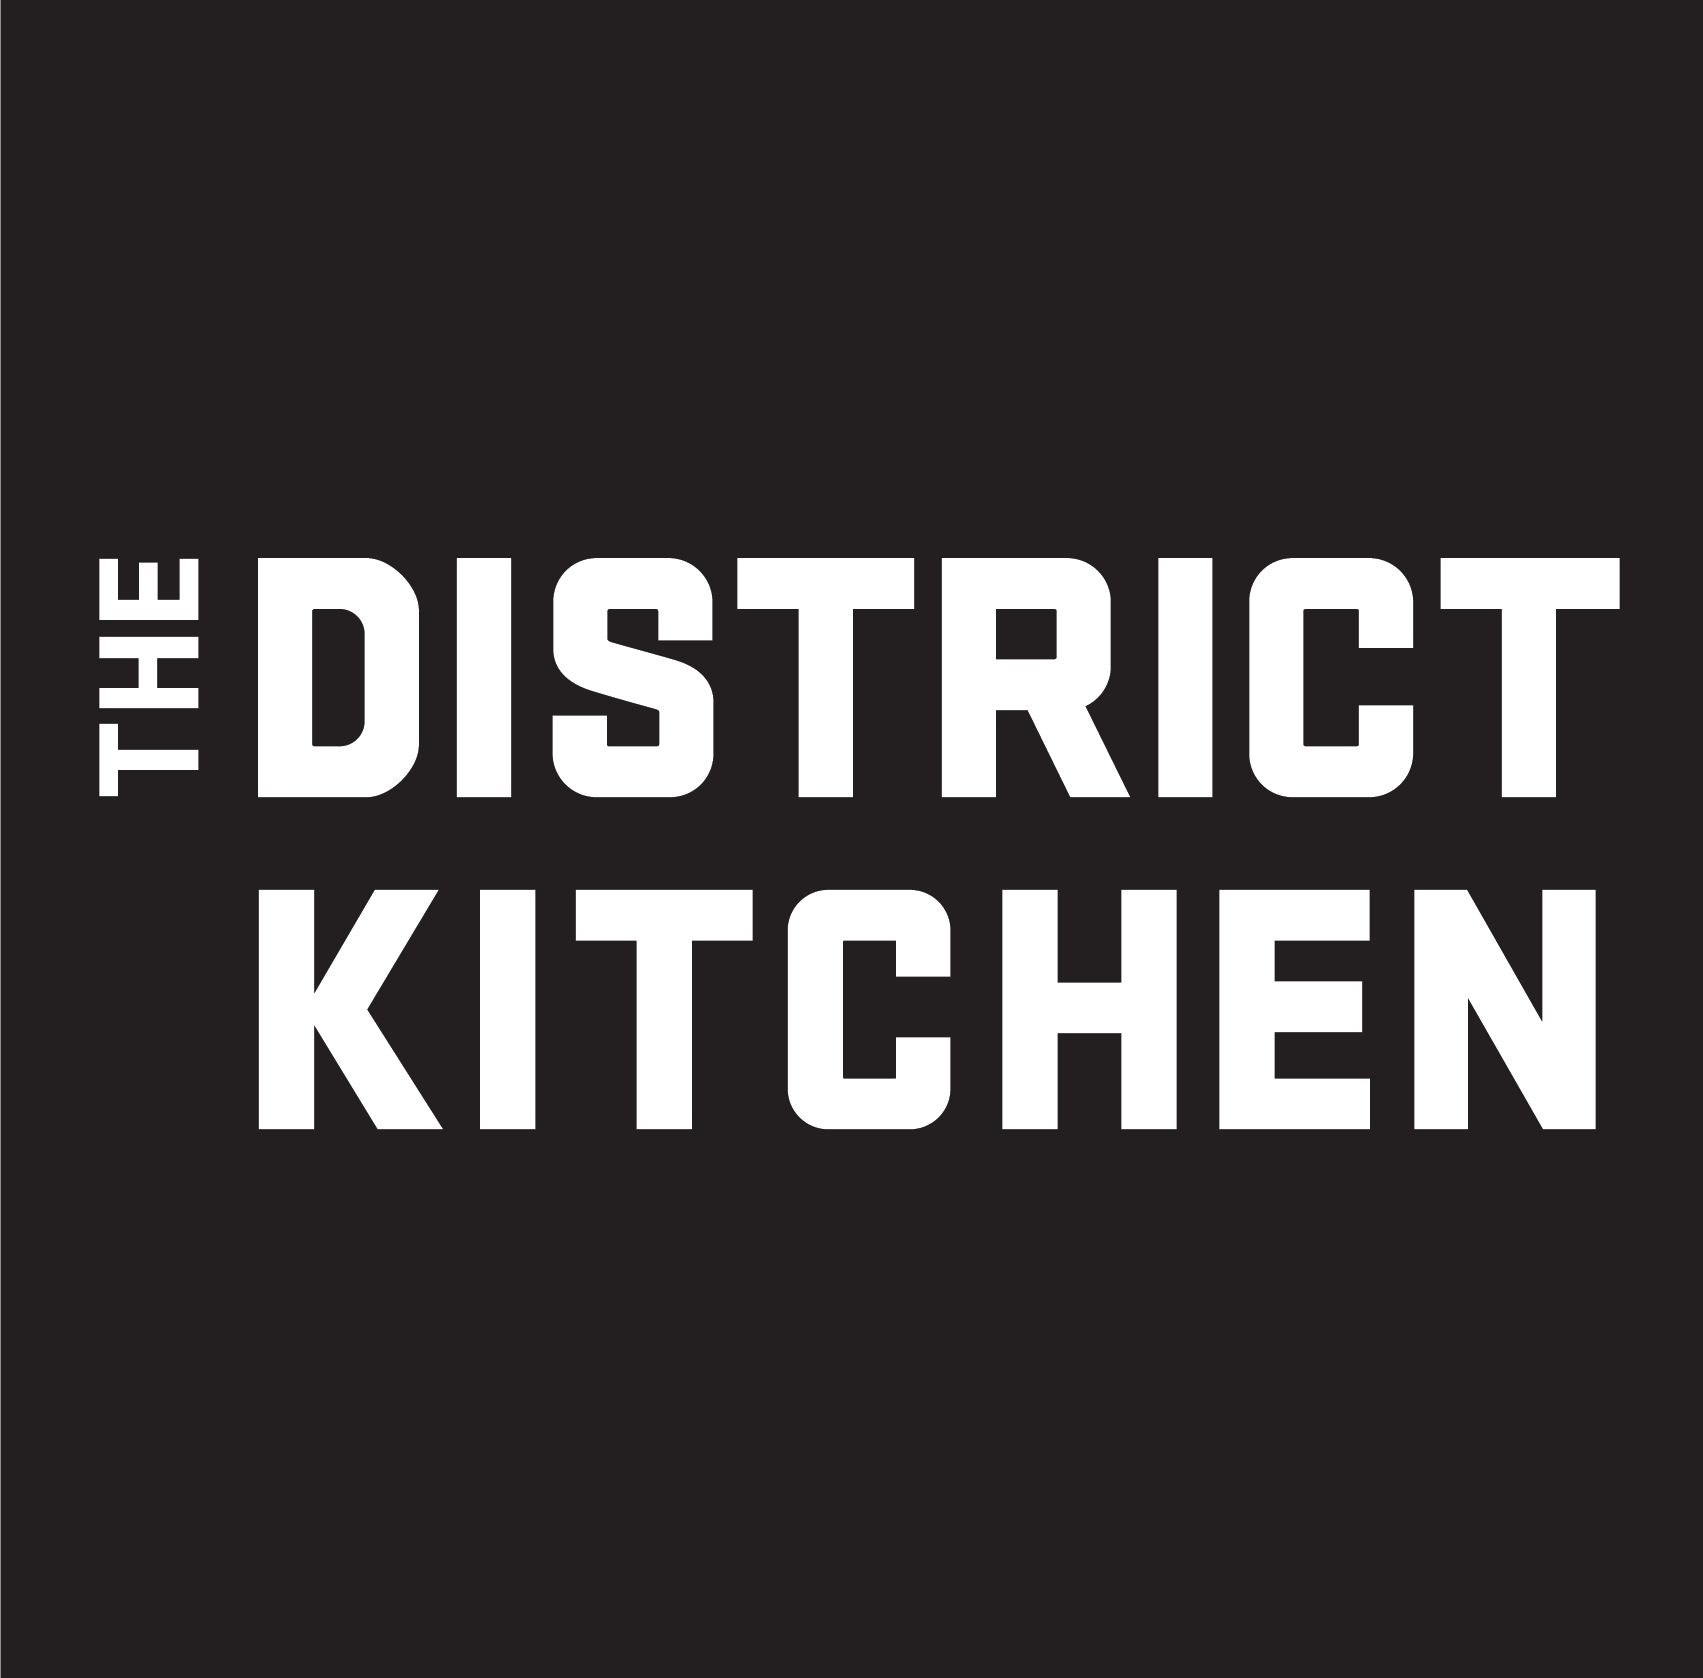 The District Kitchen logo